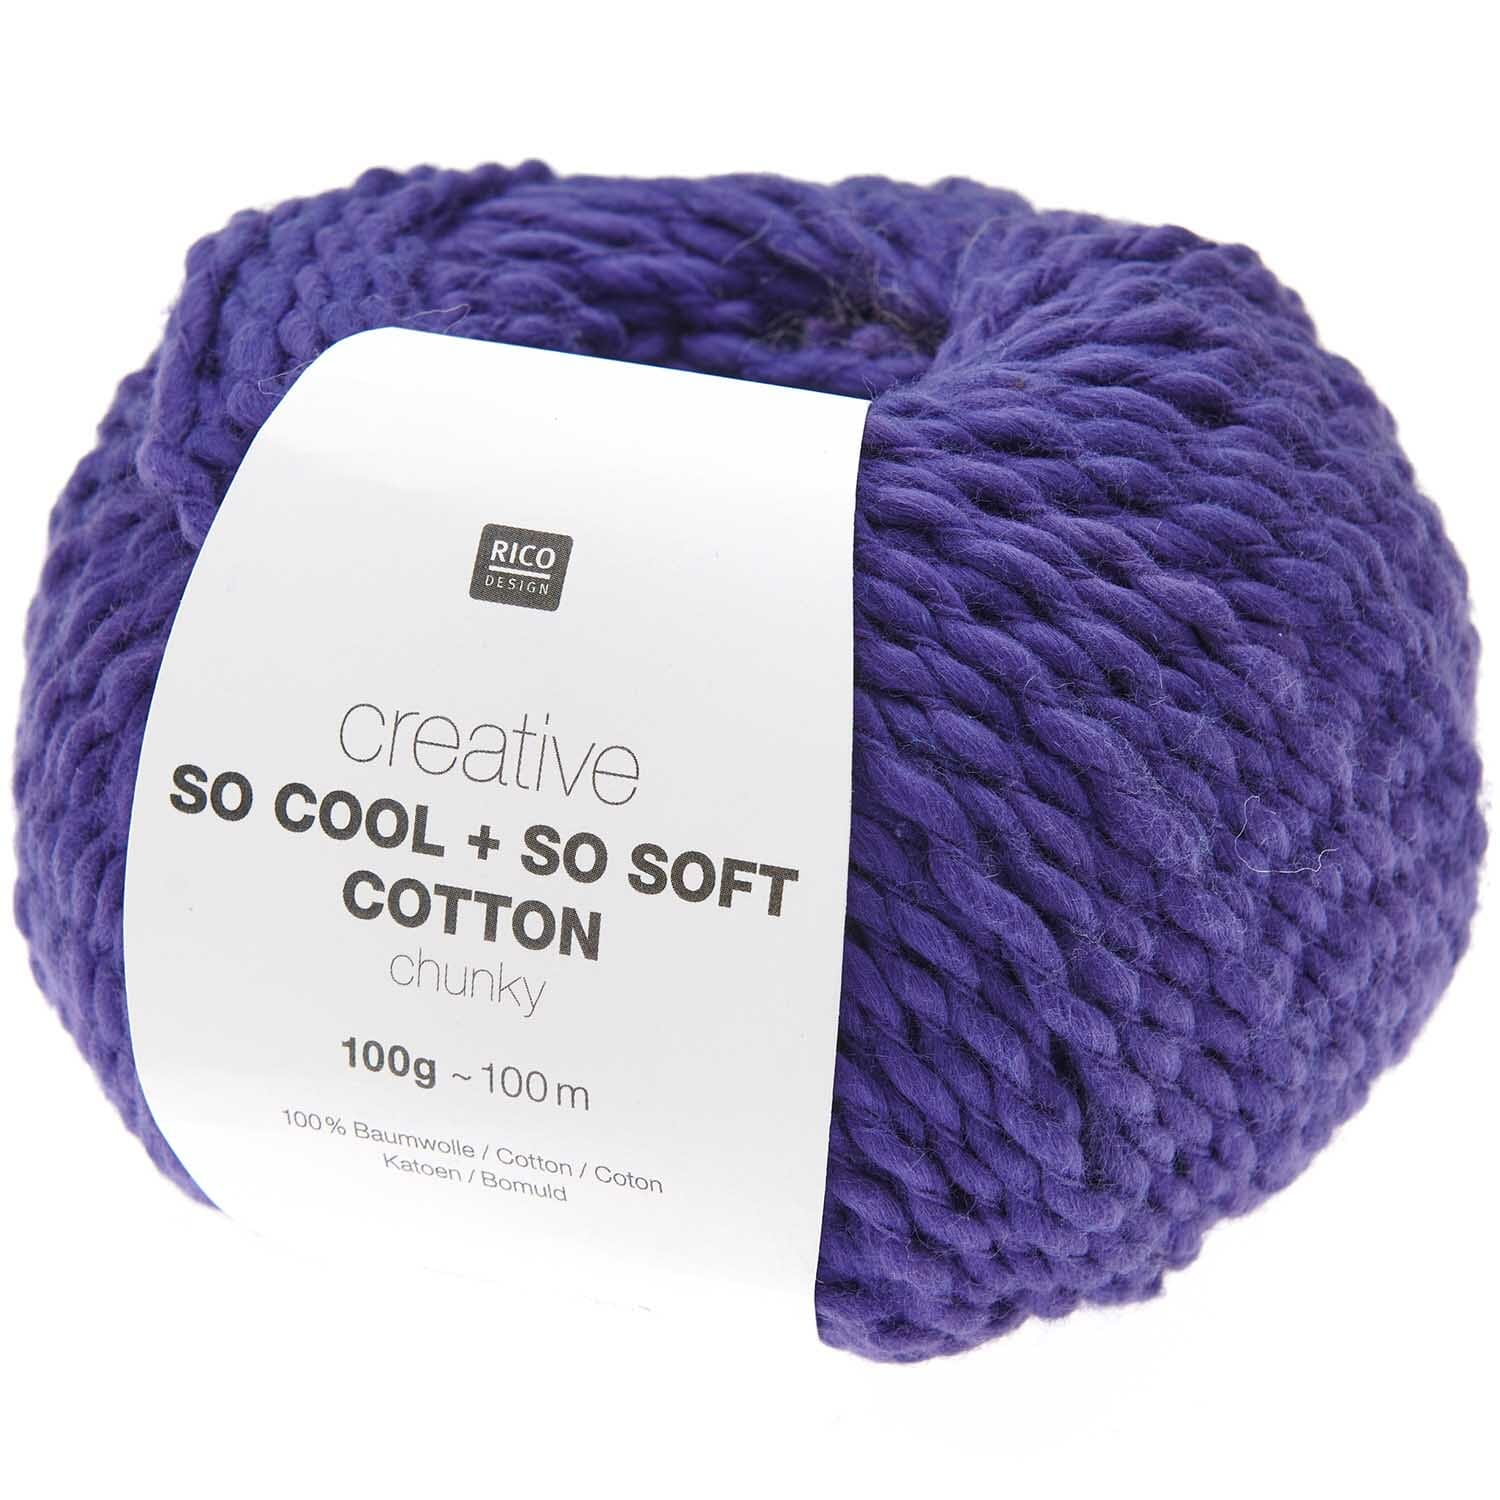 Rico Creative So Cool+Soft Cotton chunky 100g